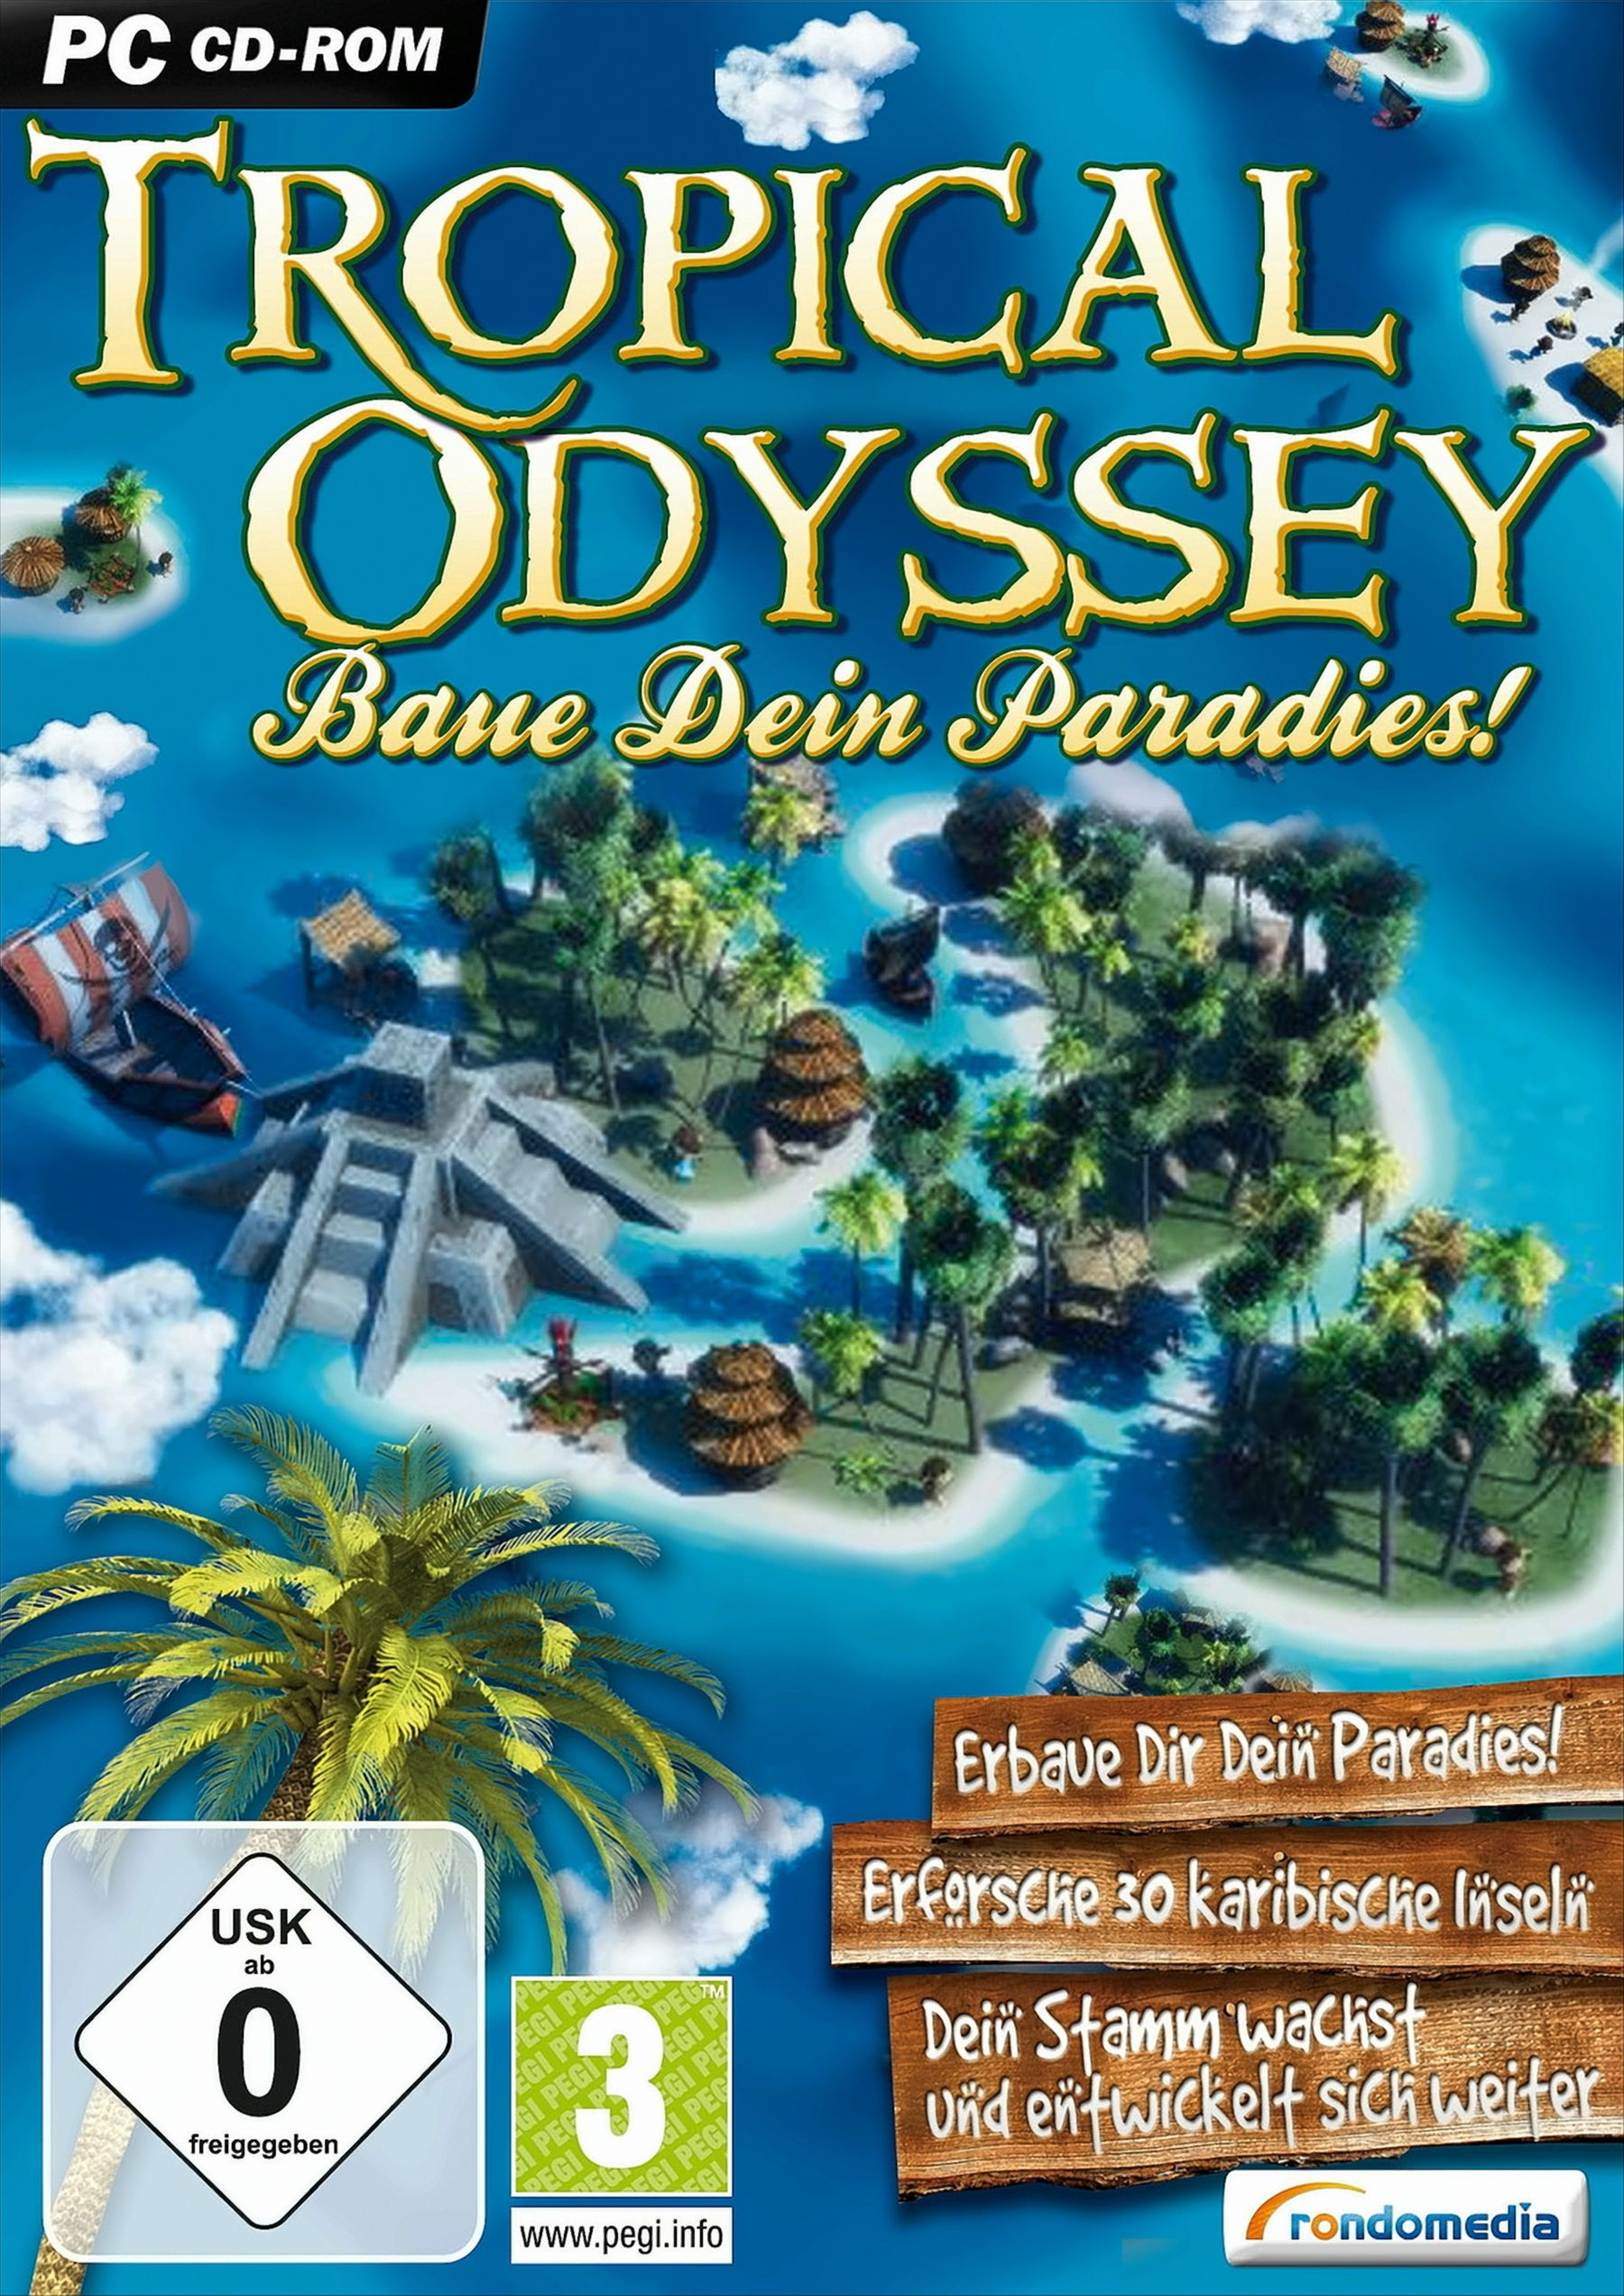 Tropical Odyssey - - Paradies! [PC] Baue Dein